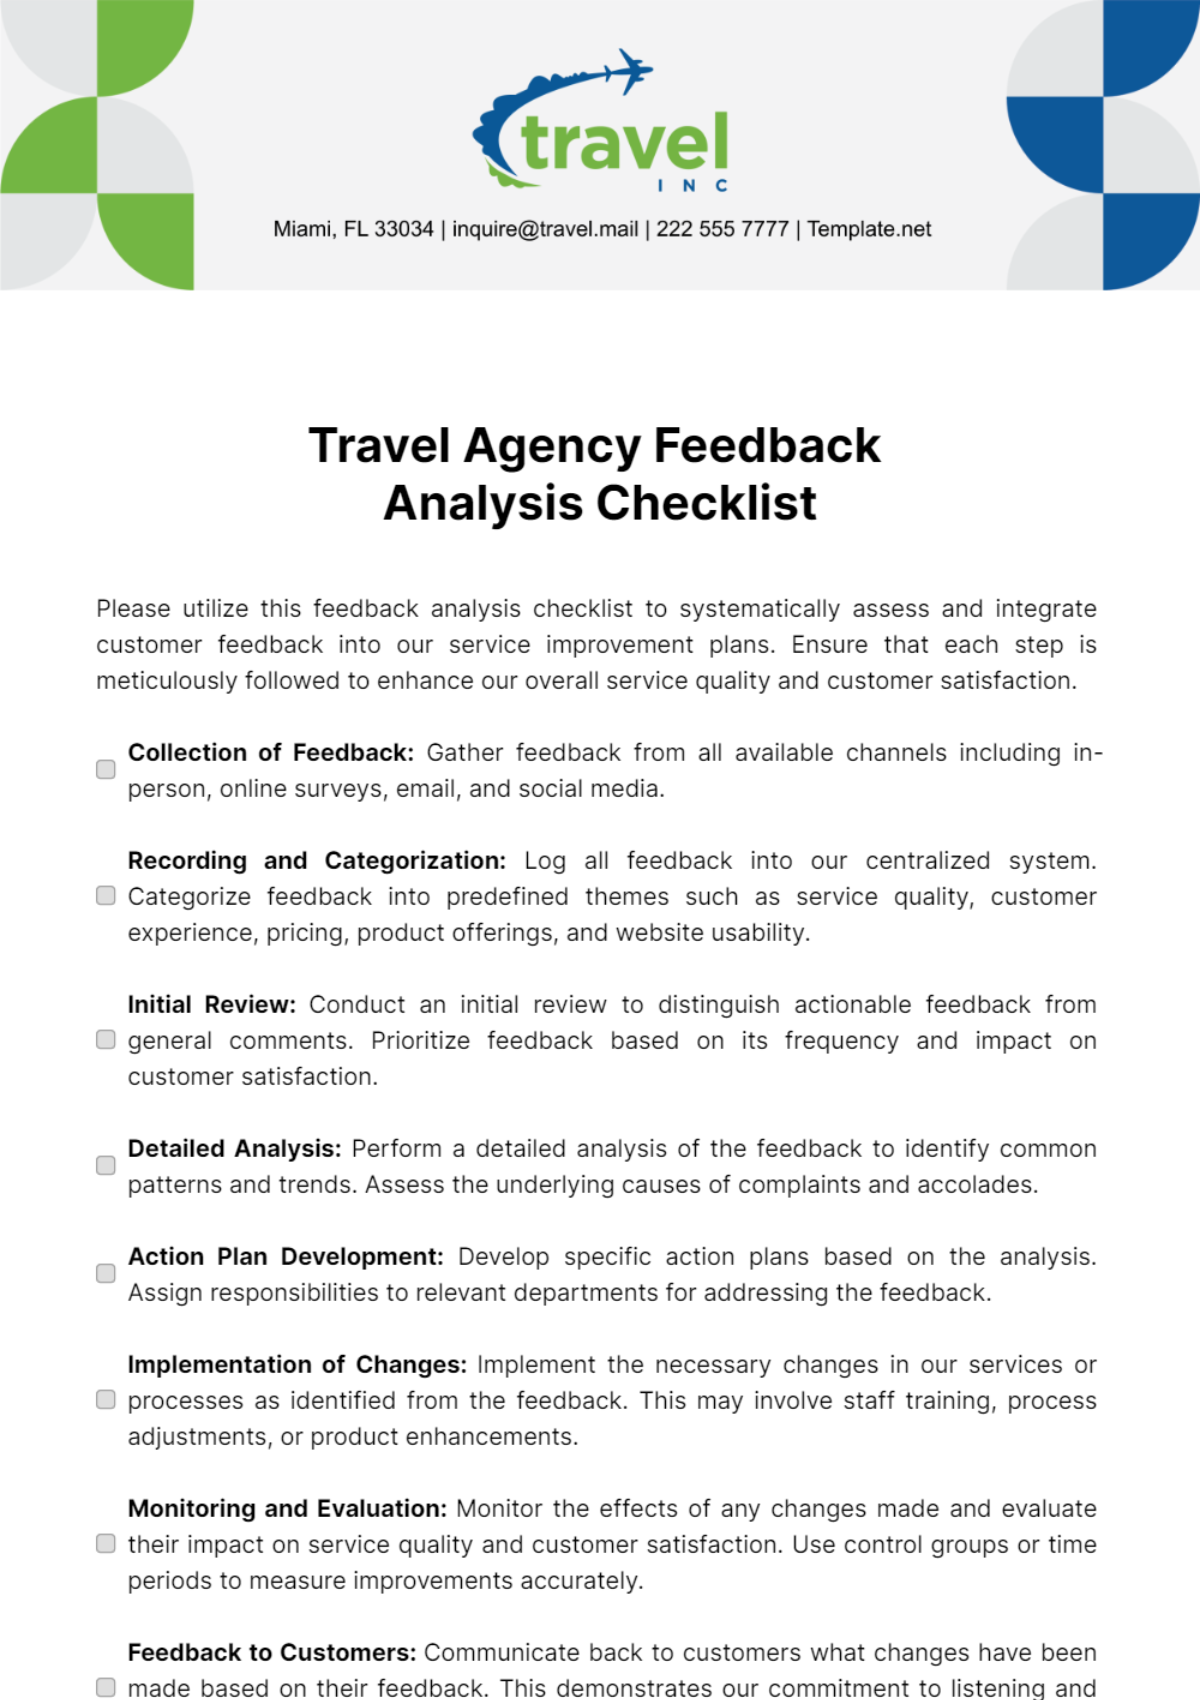 Free Travel Agency Feedback Analysis Checklist Template